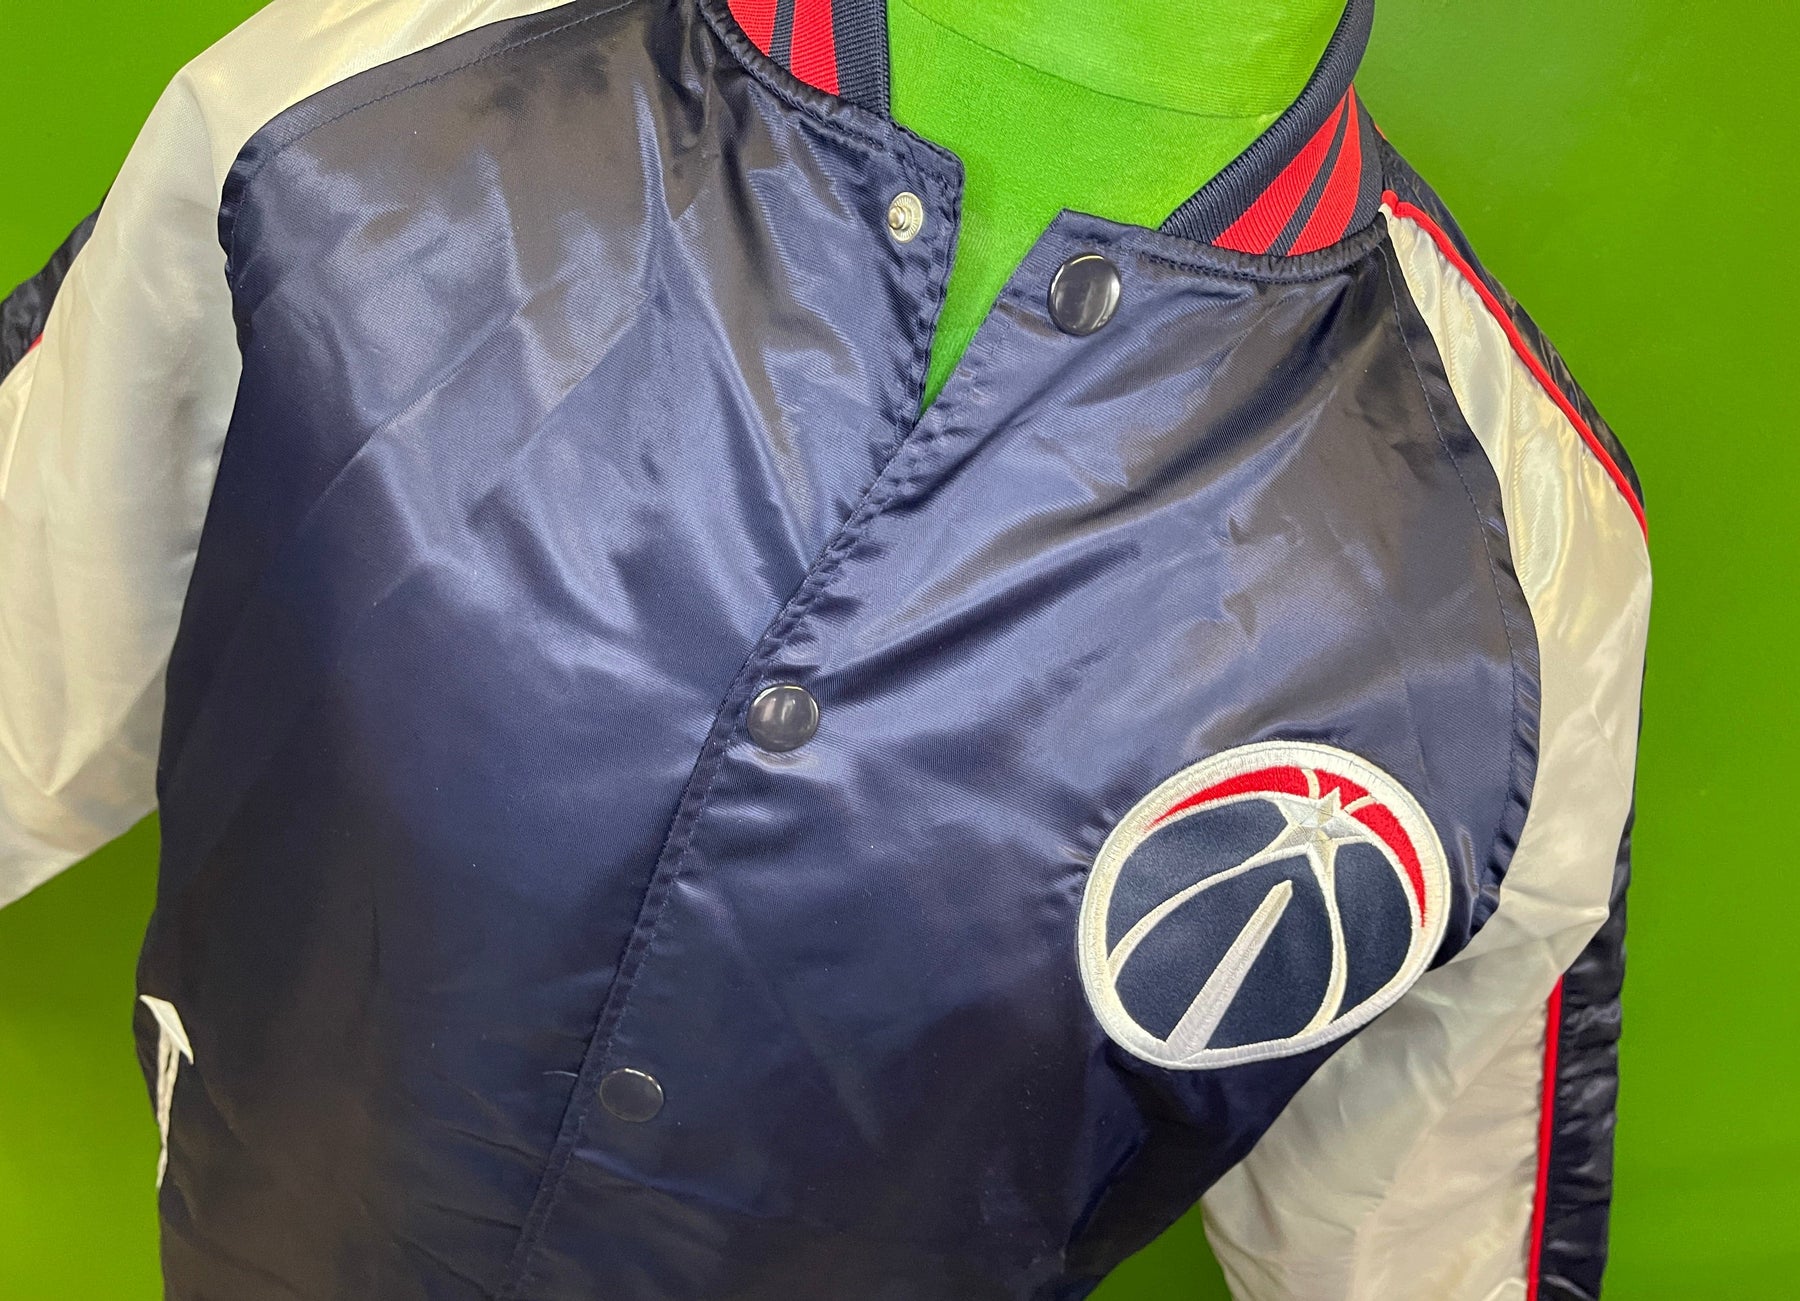 NBA Washington Wizards Majestic Like-New Bomber Jacket Men's Medium Tall